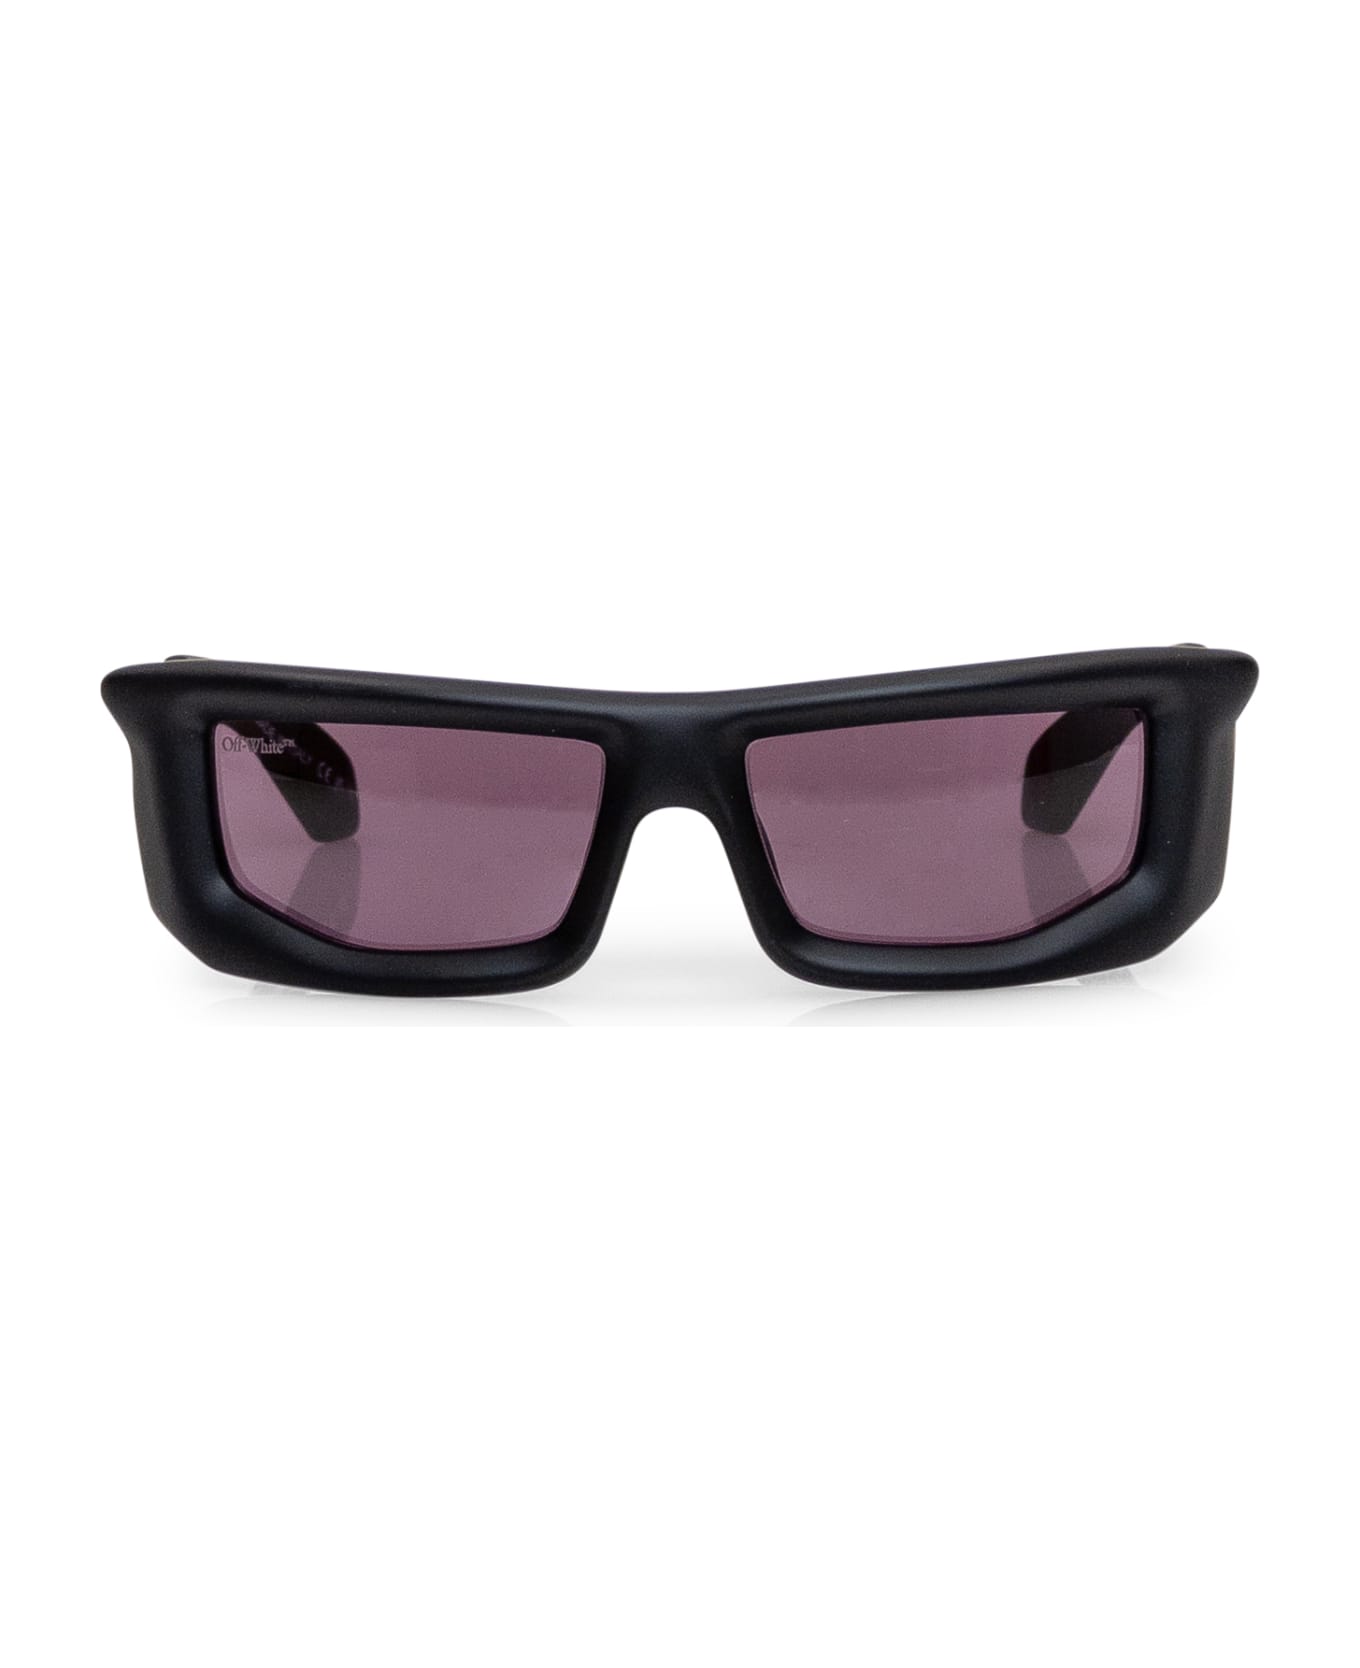 Off-White Volcanite Sunglasses - BLACK DARK サングラス